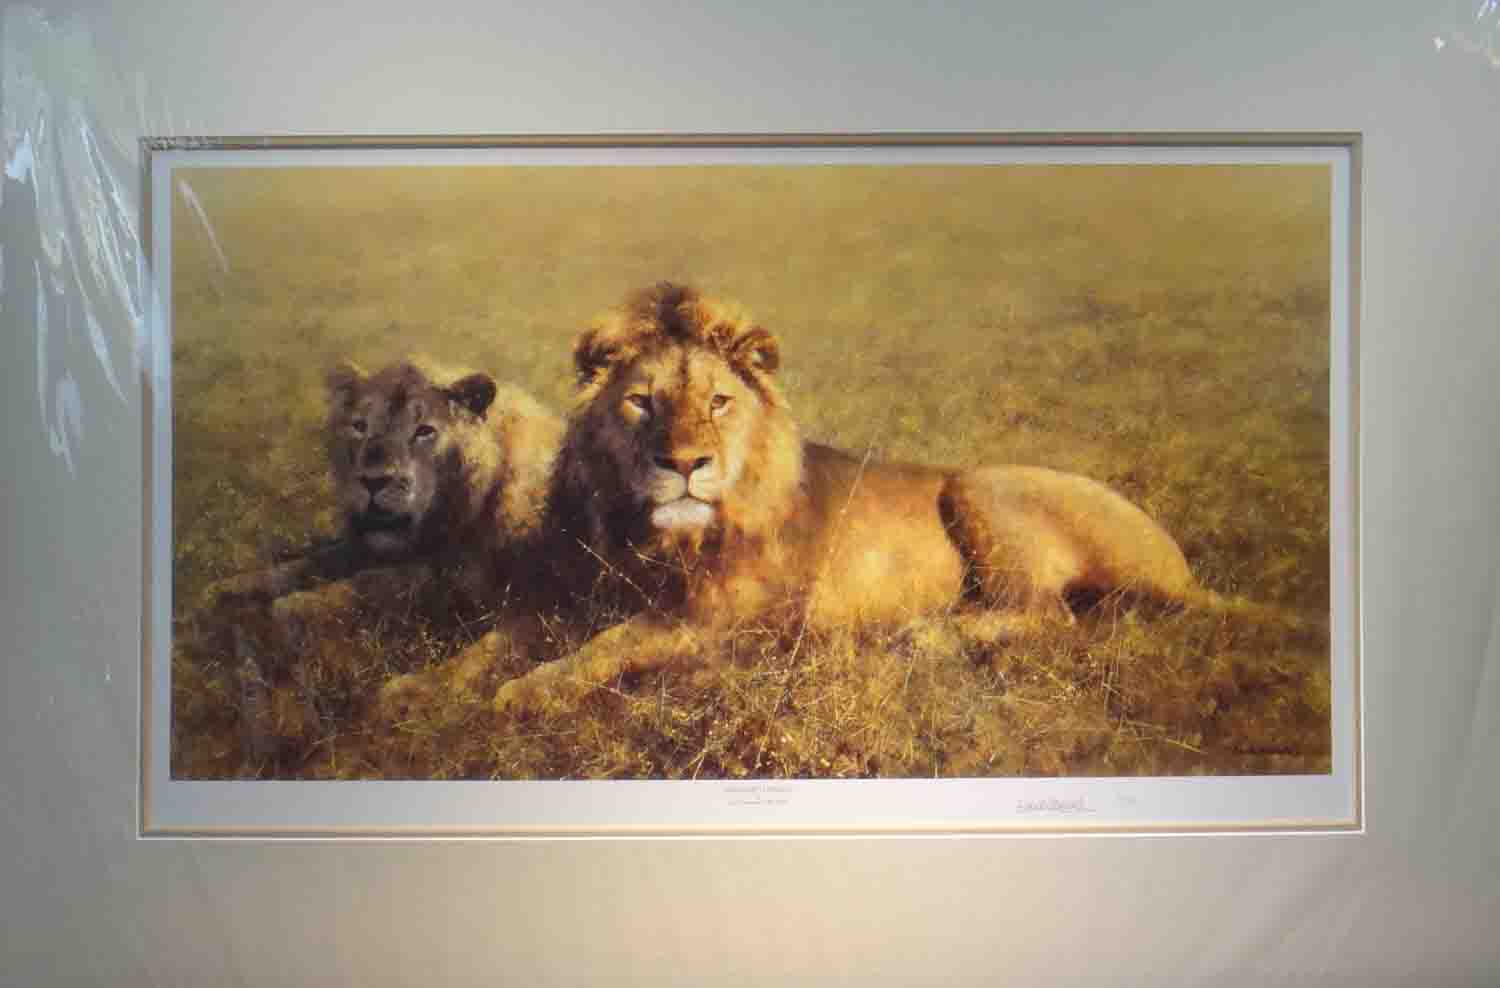 david shepherd signed limited edition print Serengeti friends mounted